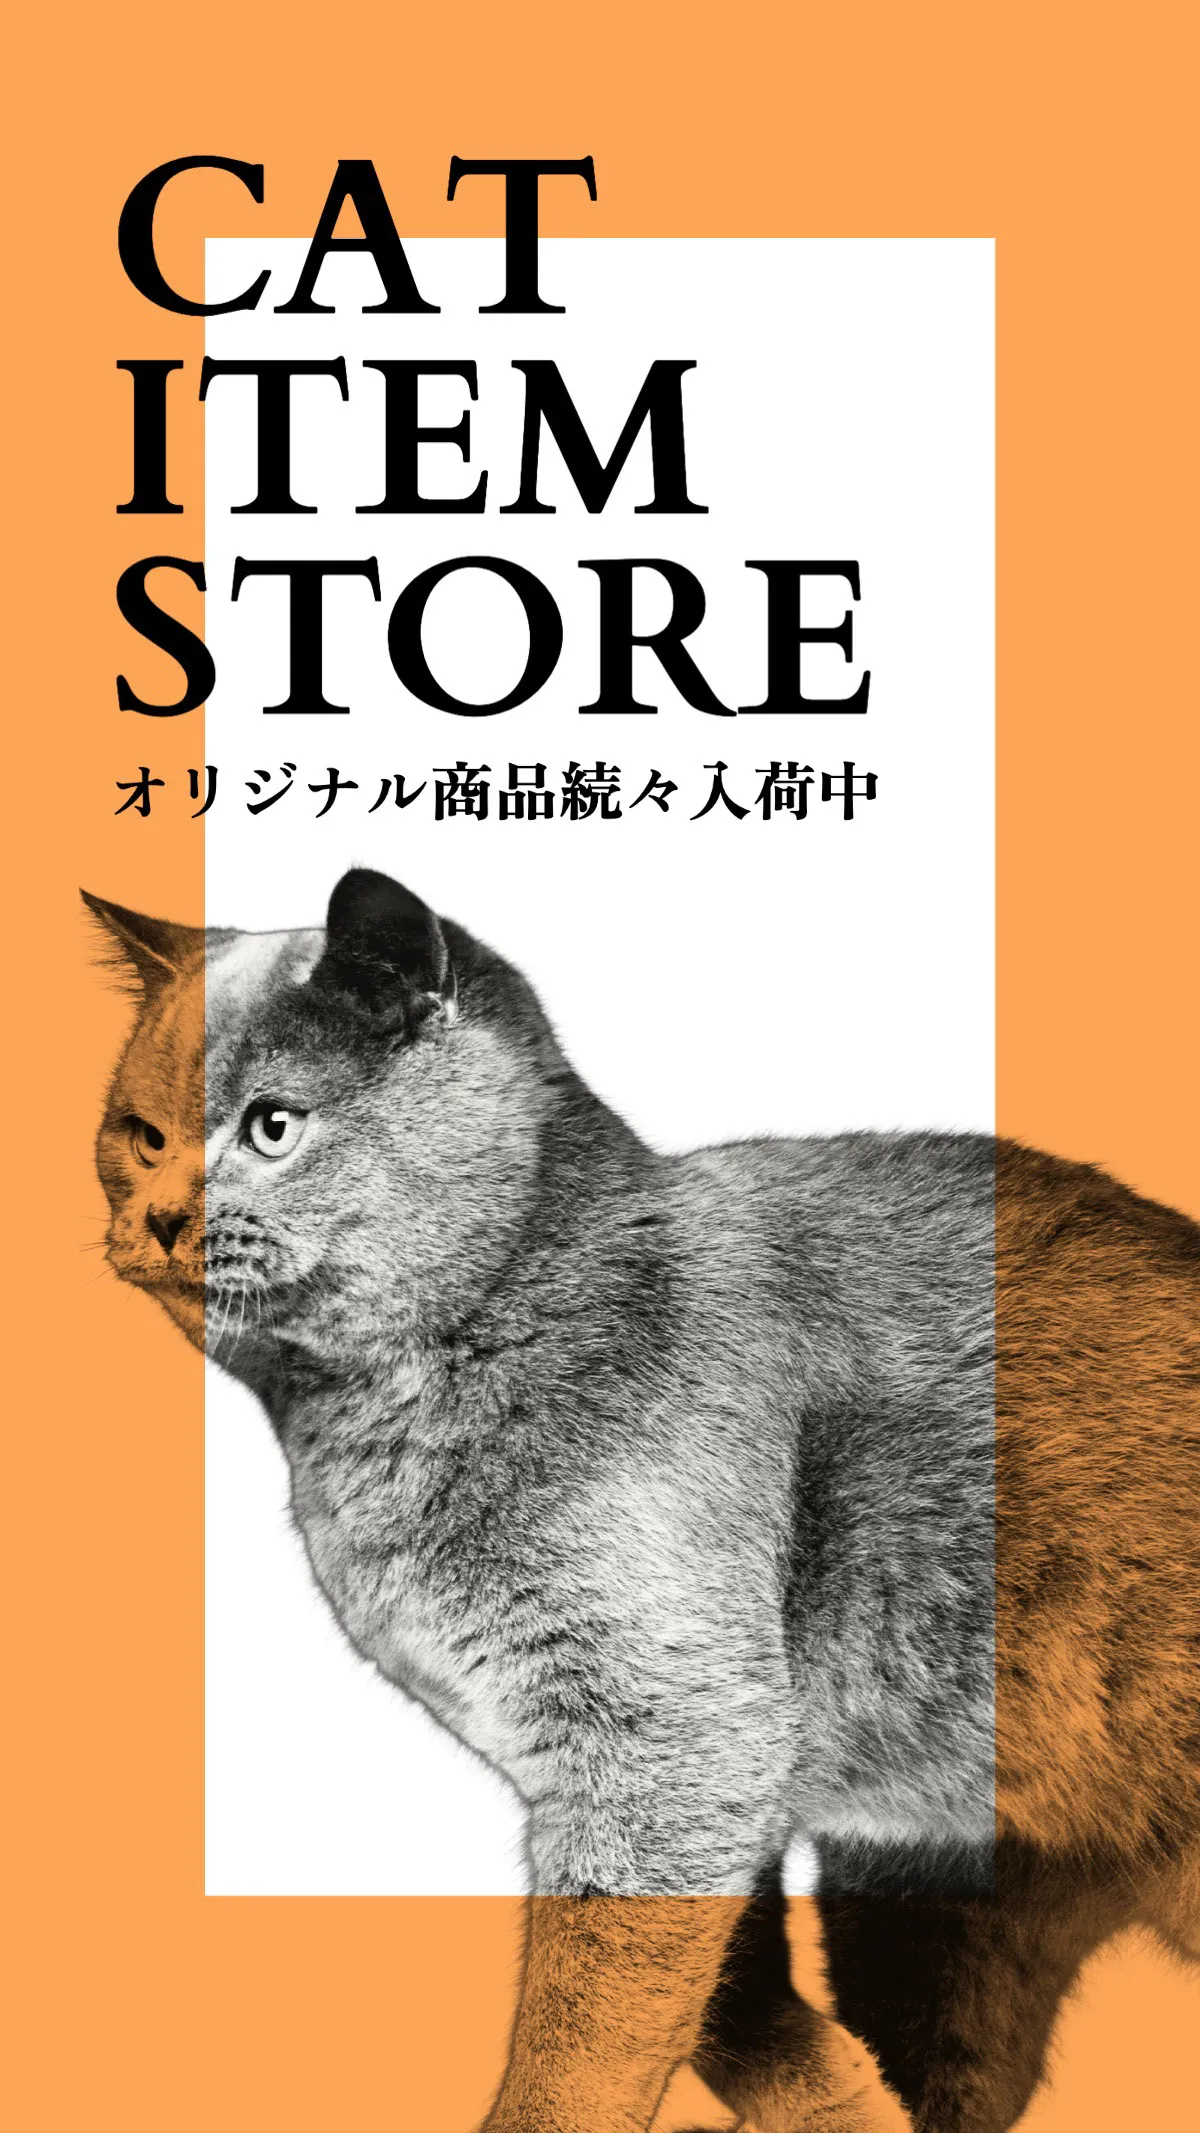 cat item store instagram story